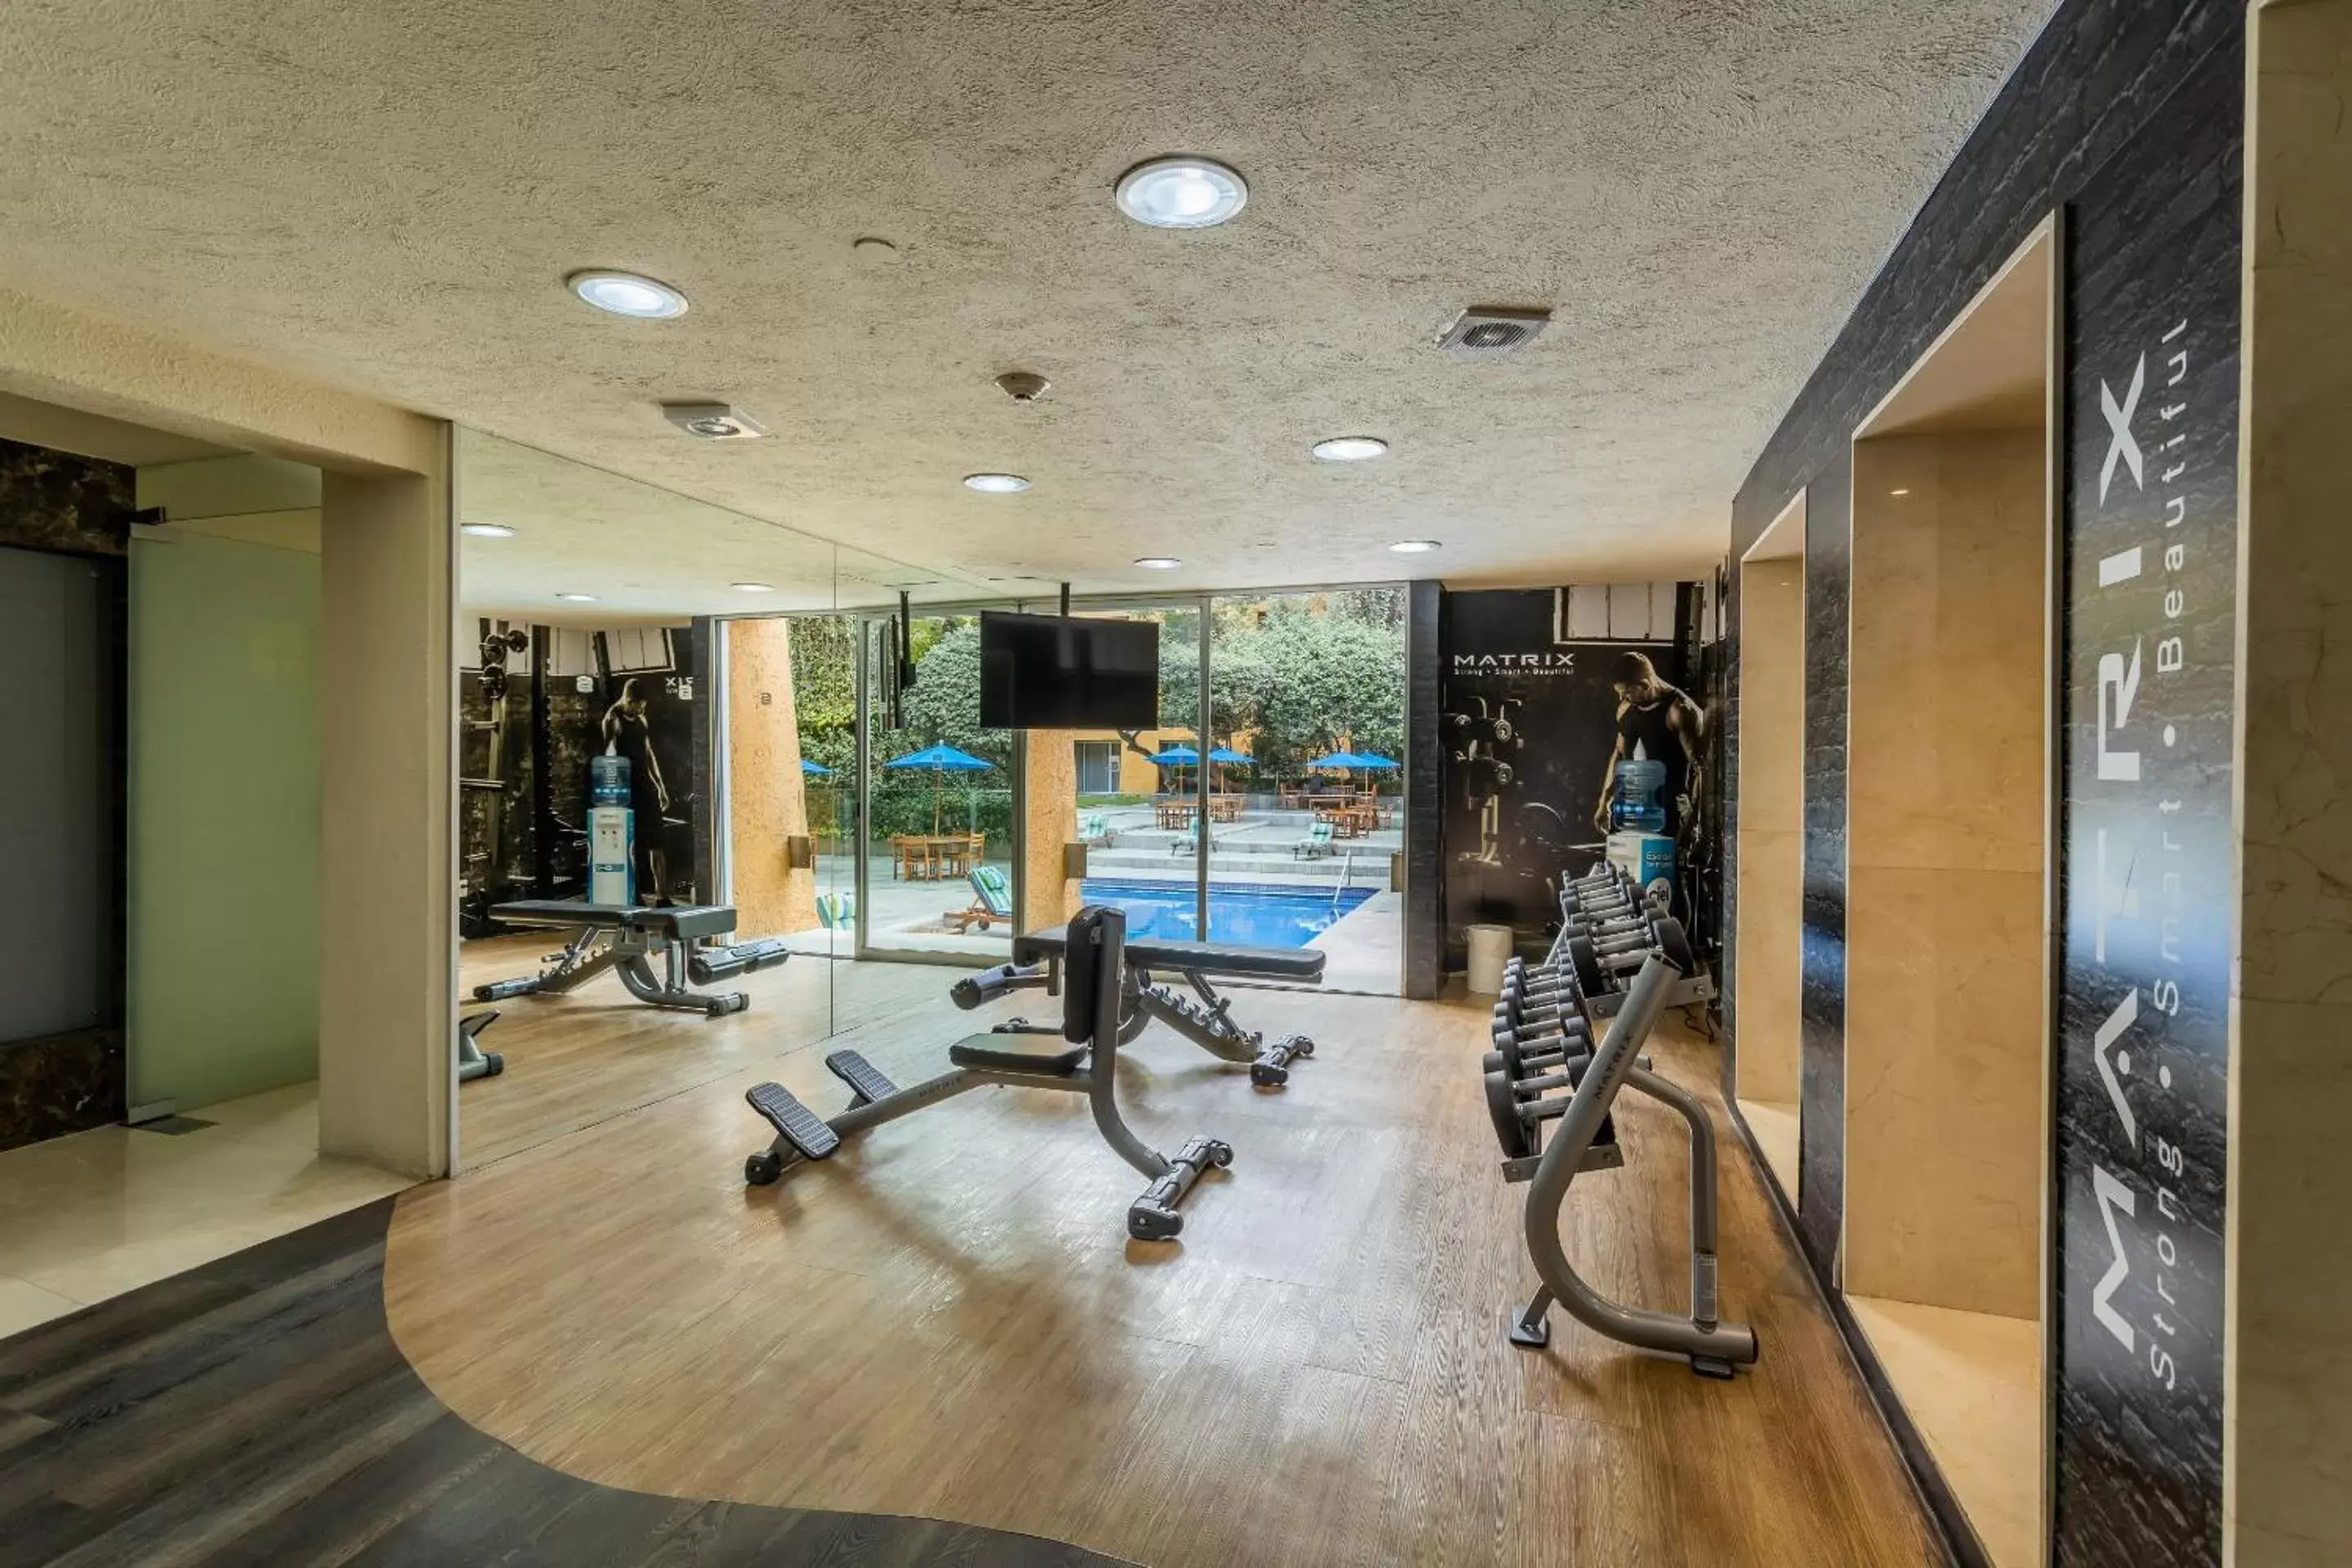 Fitness centre/facilities, Fitness Center/Facilities in Camino Real Polanco Mexico